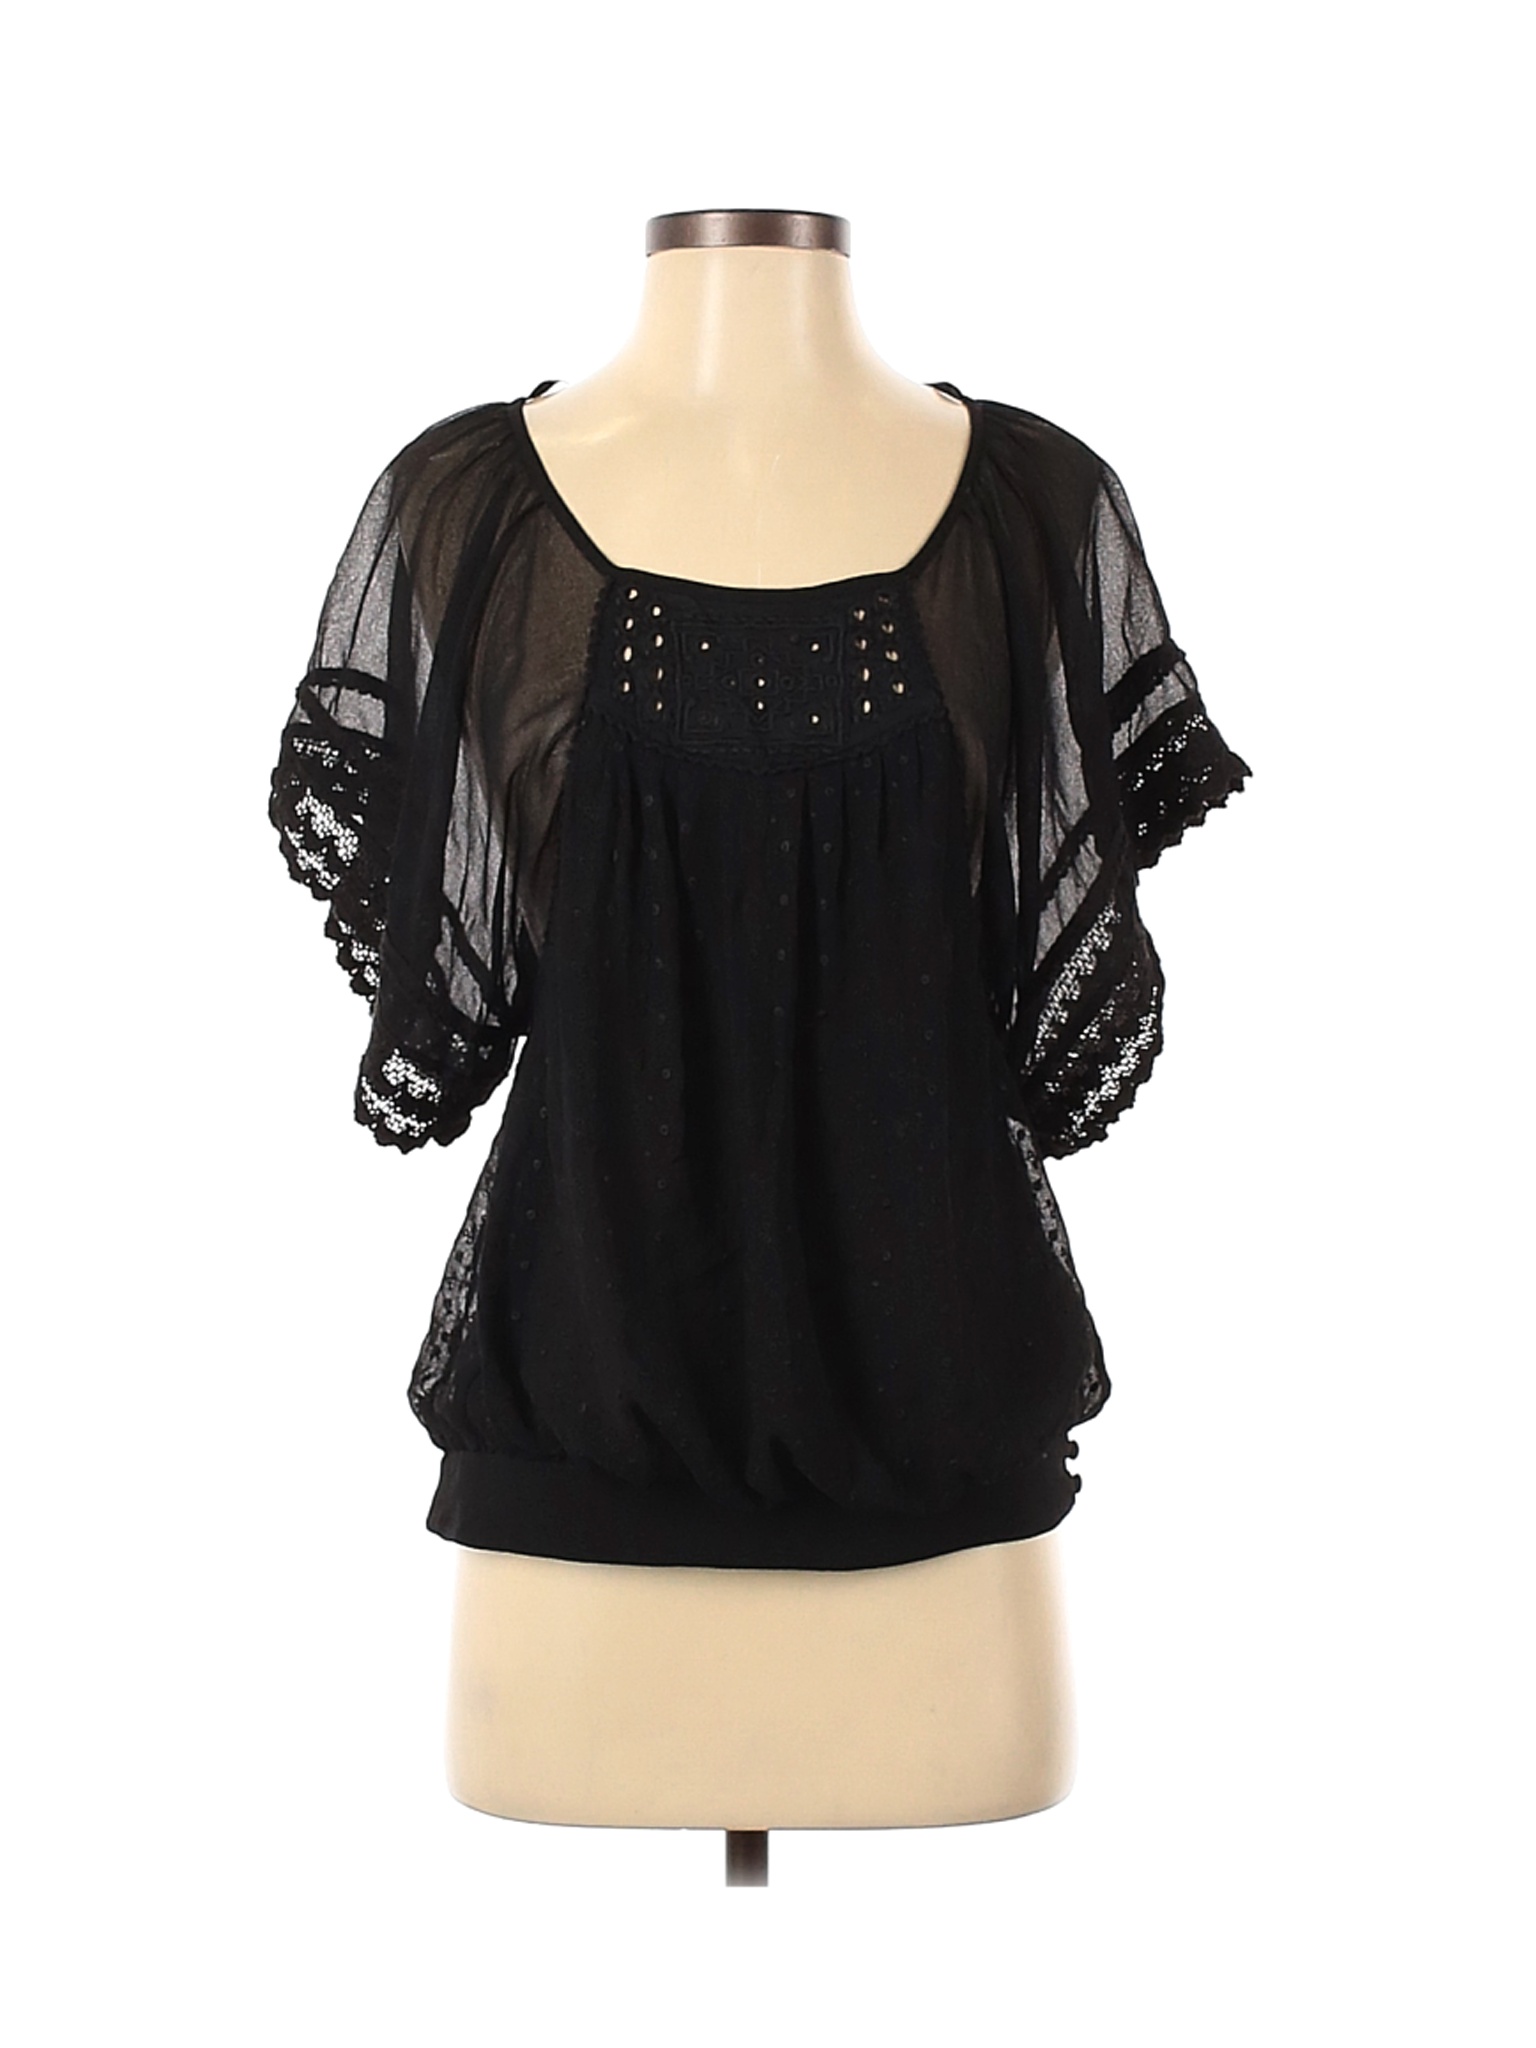 Free People Women Black Short Sleeve Blouse S | eBay